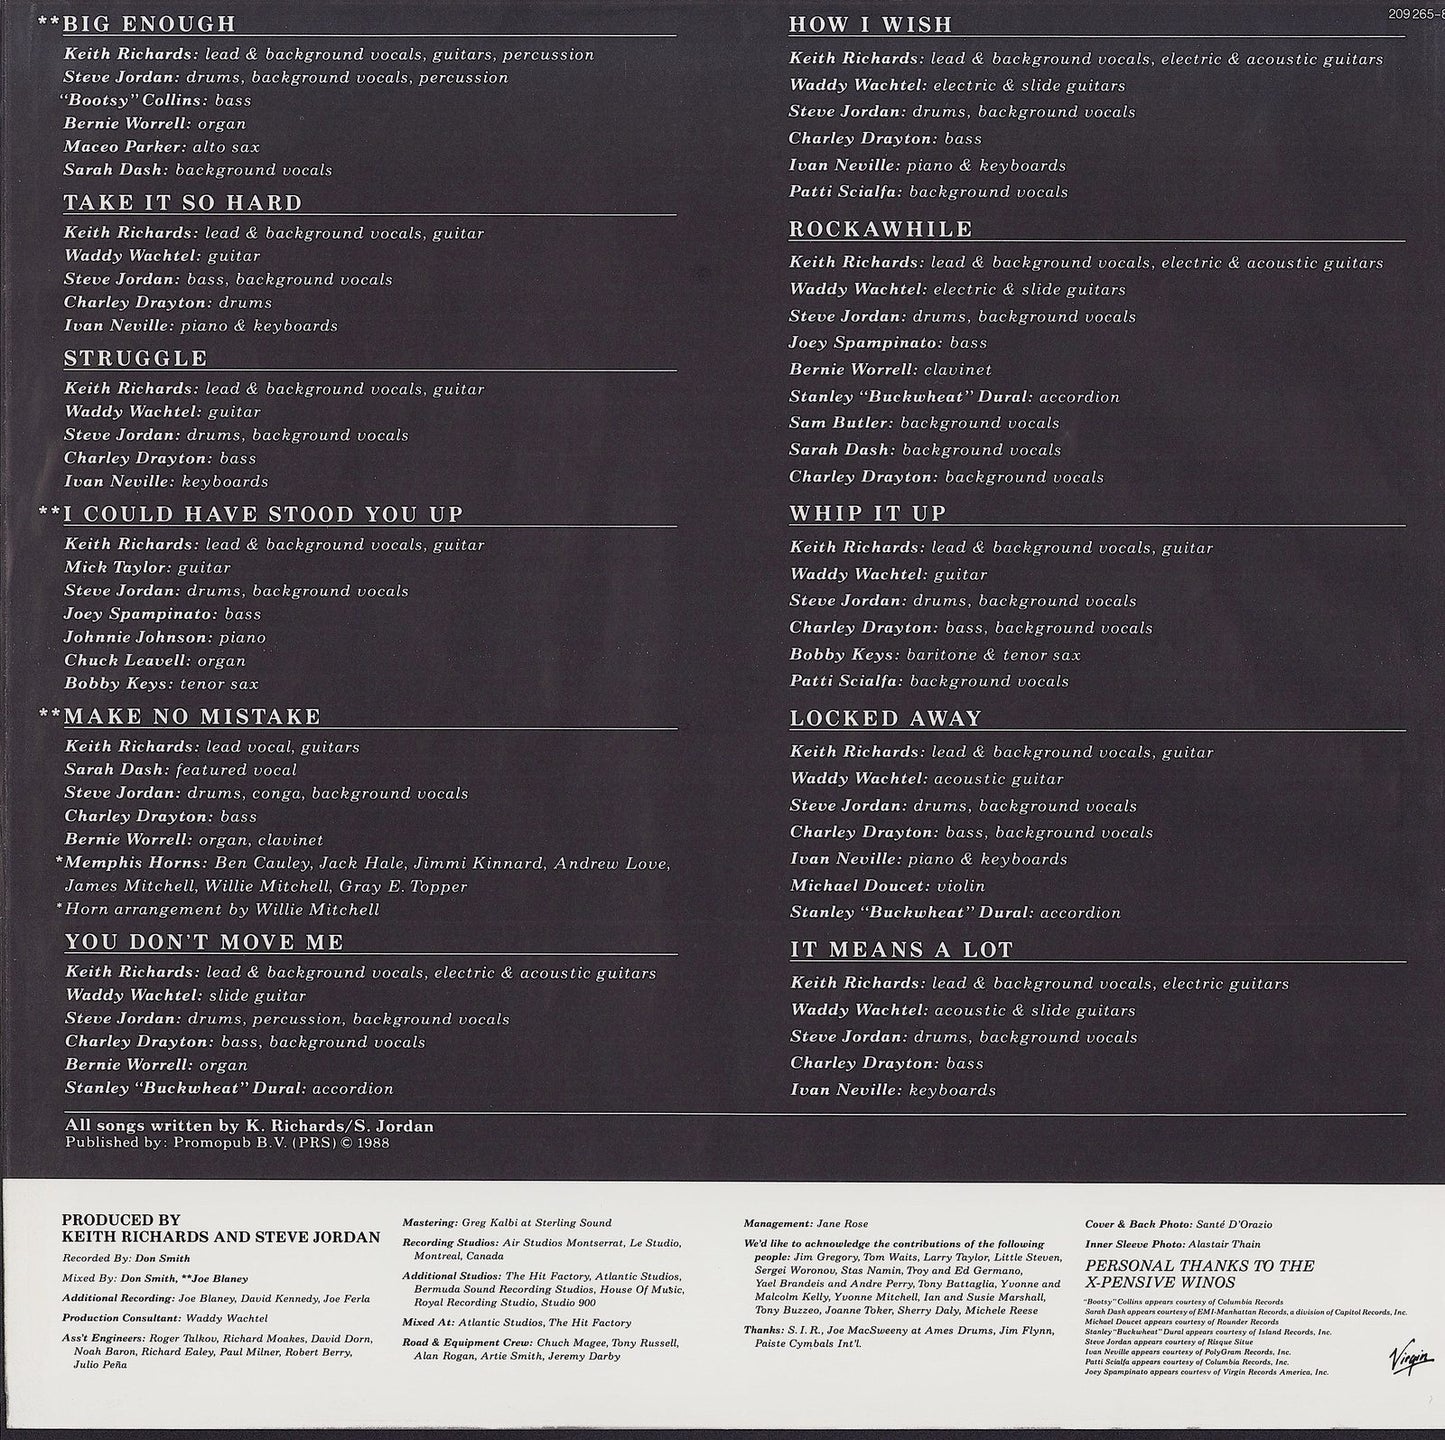 Keith Richards ‎- Talk Is Cheap Vinyl LP 2.